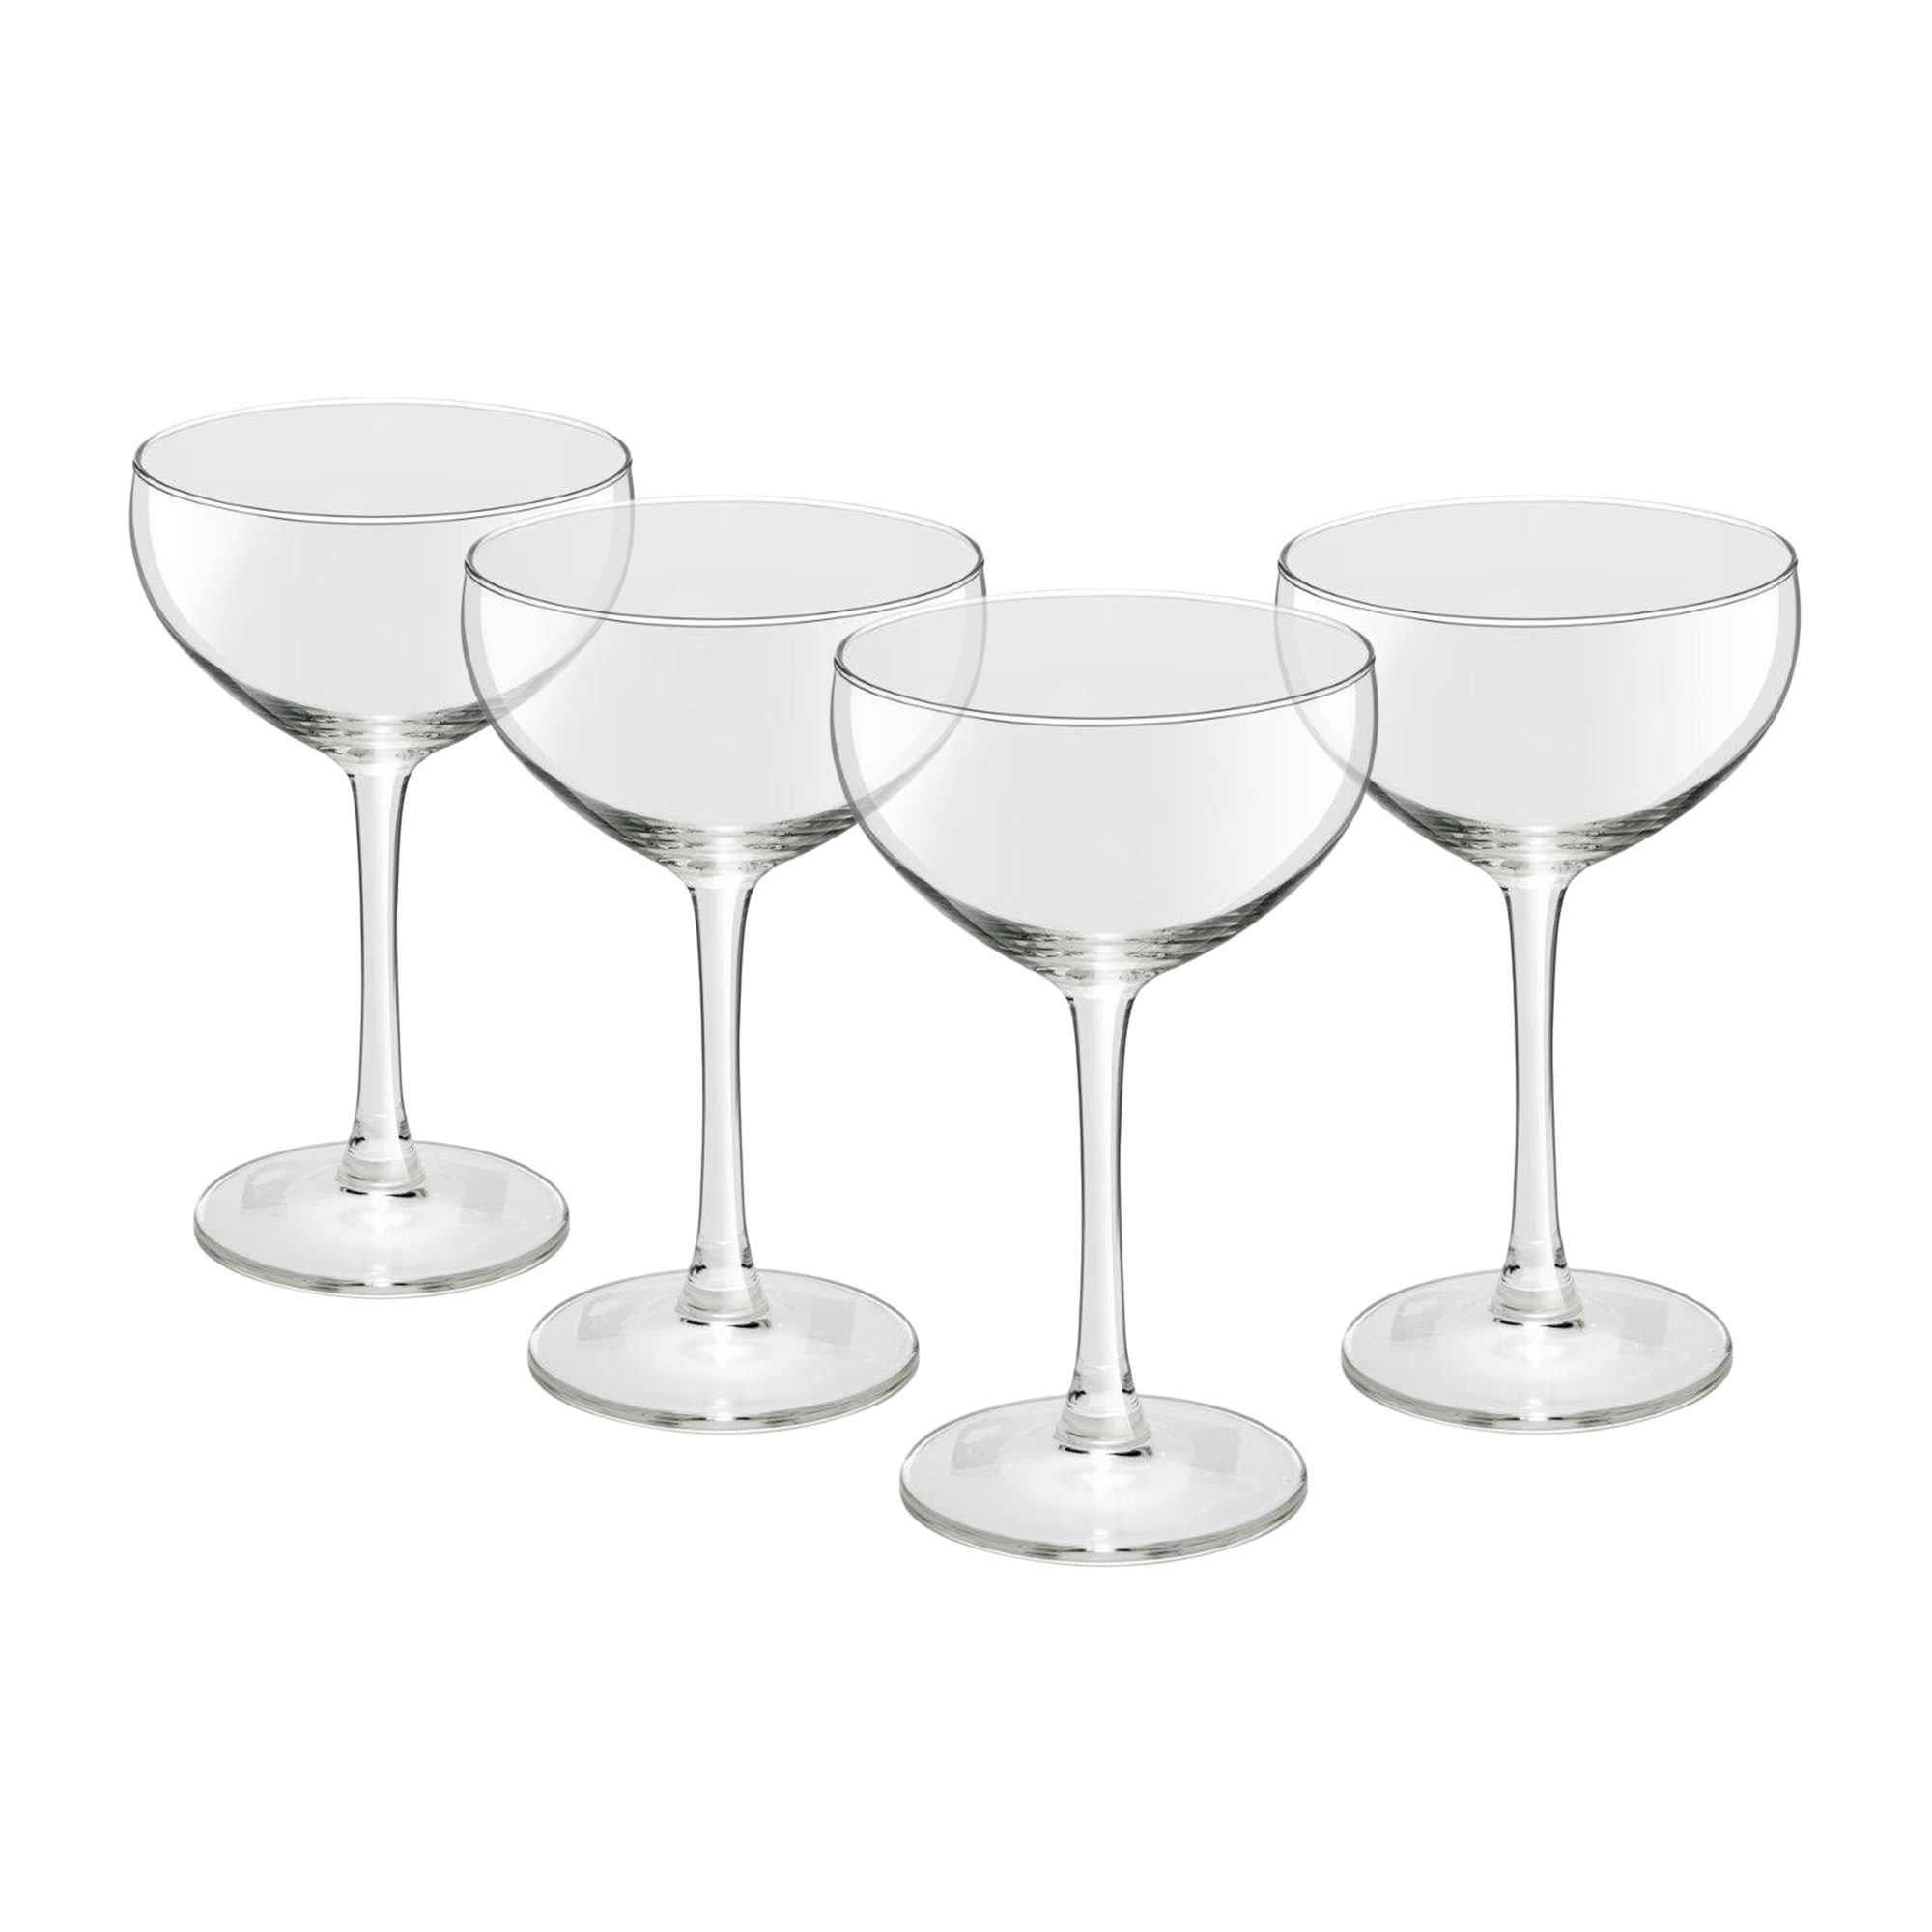 Royal Leerdam Espresso Martini Cocktail Glass 240ml Set of 4 Image 1